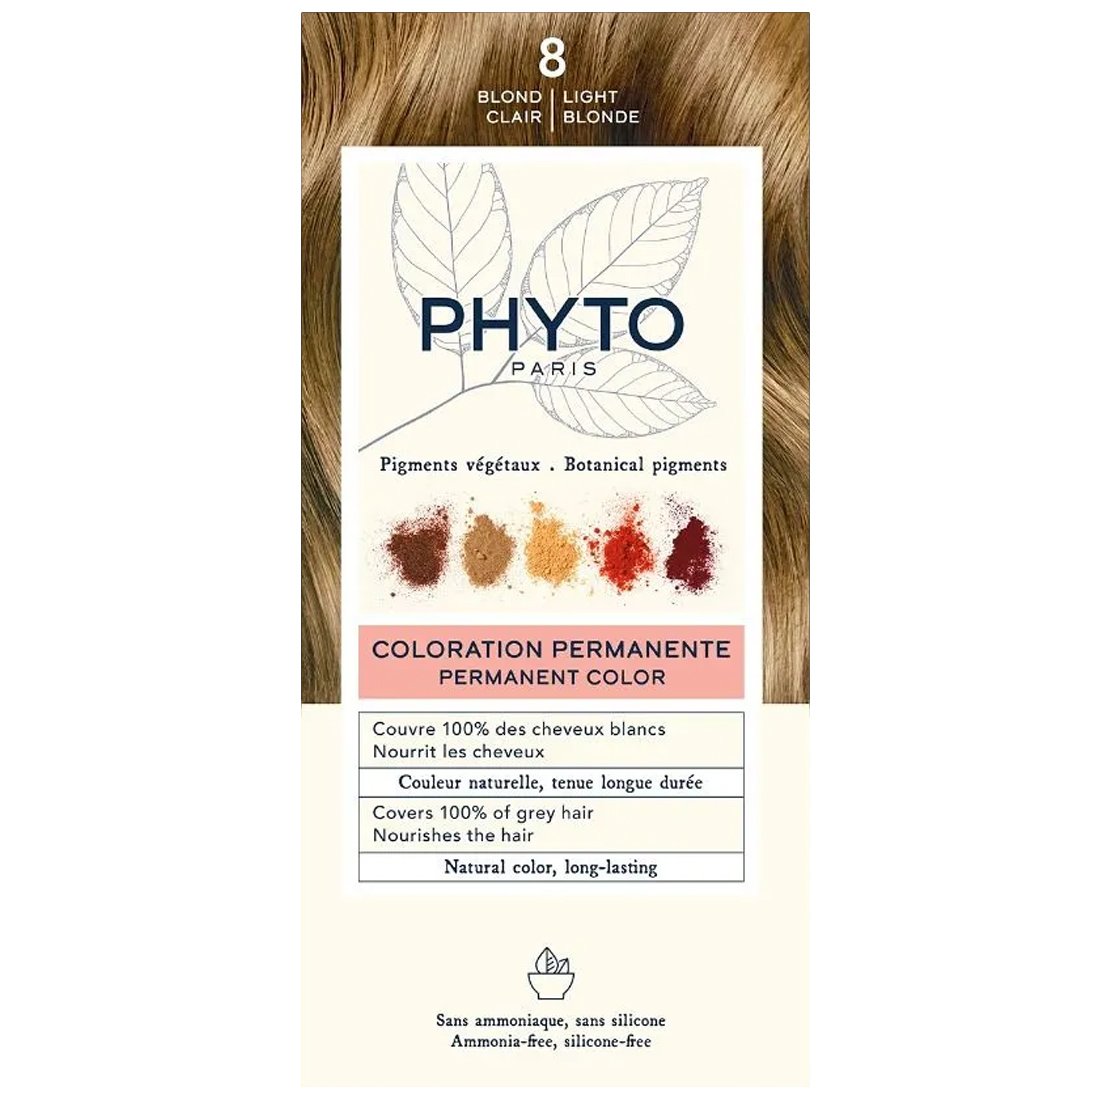 Phyto Permanent Hair Color Kit Μόνιμη Βαφή Μαλλιών με Φυτικές Χρωστικές, Χωρίς Αμμωνία 1 Τεμάχιο – 8 Ξανθό Ανοιχτό